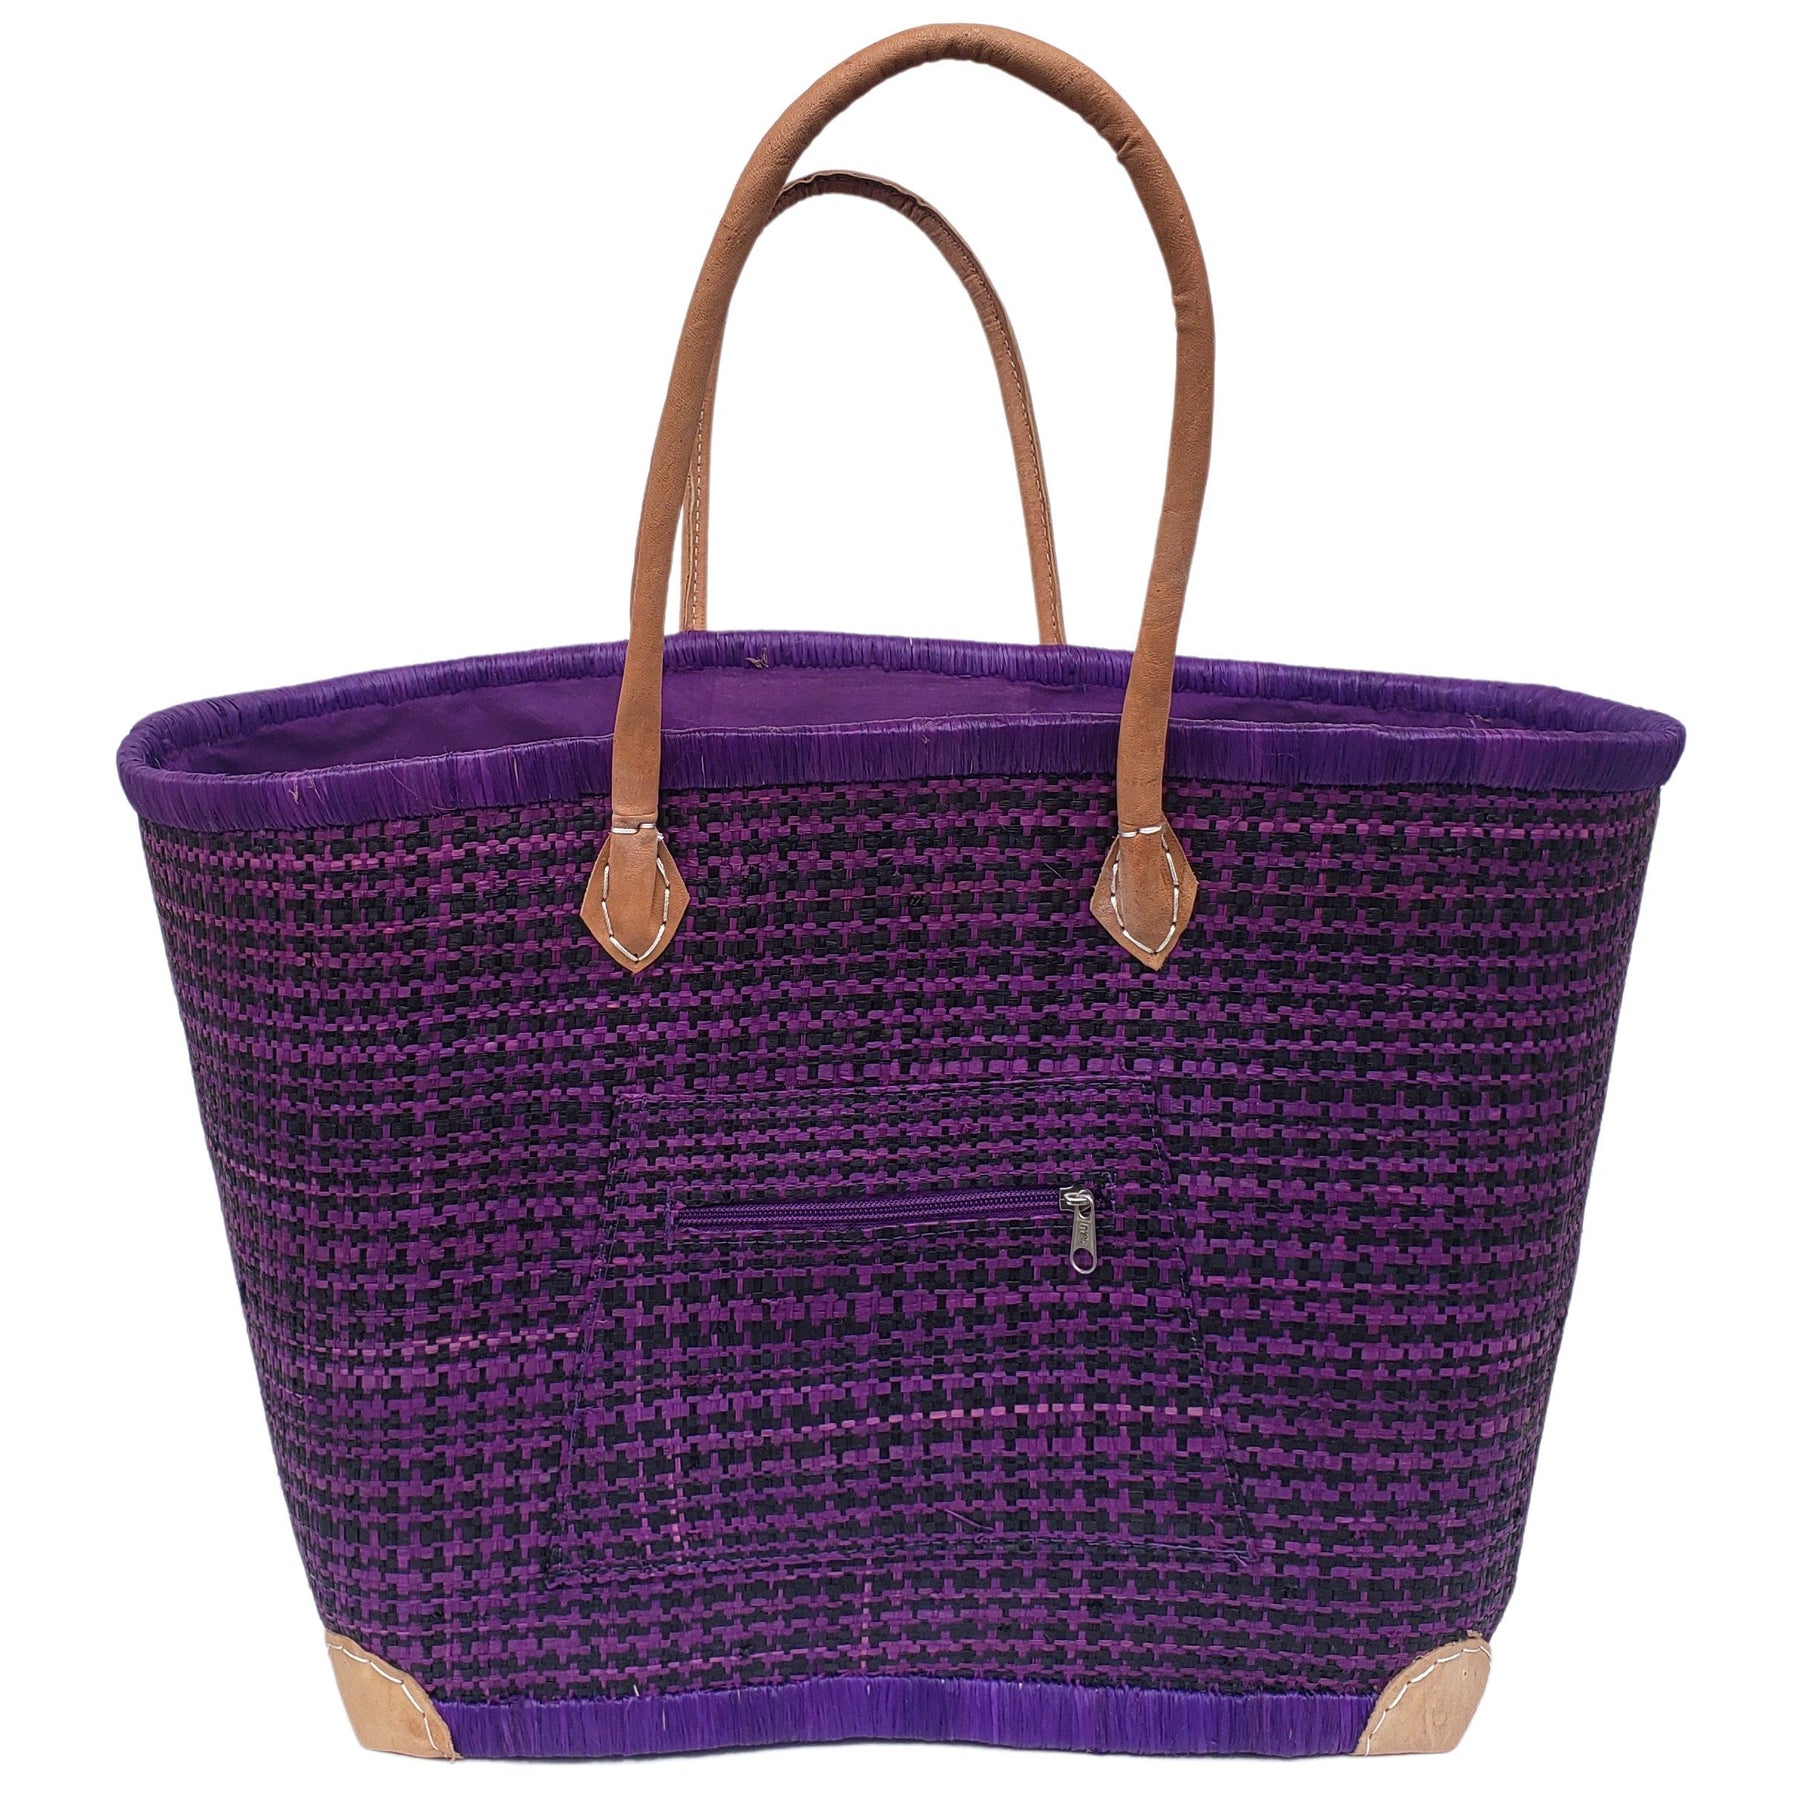 1 of 59: Adjanie: Authentic Madagascar Raffia and Leather Tote Bag (Purple and Black)